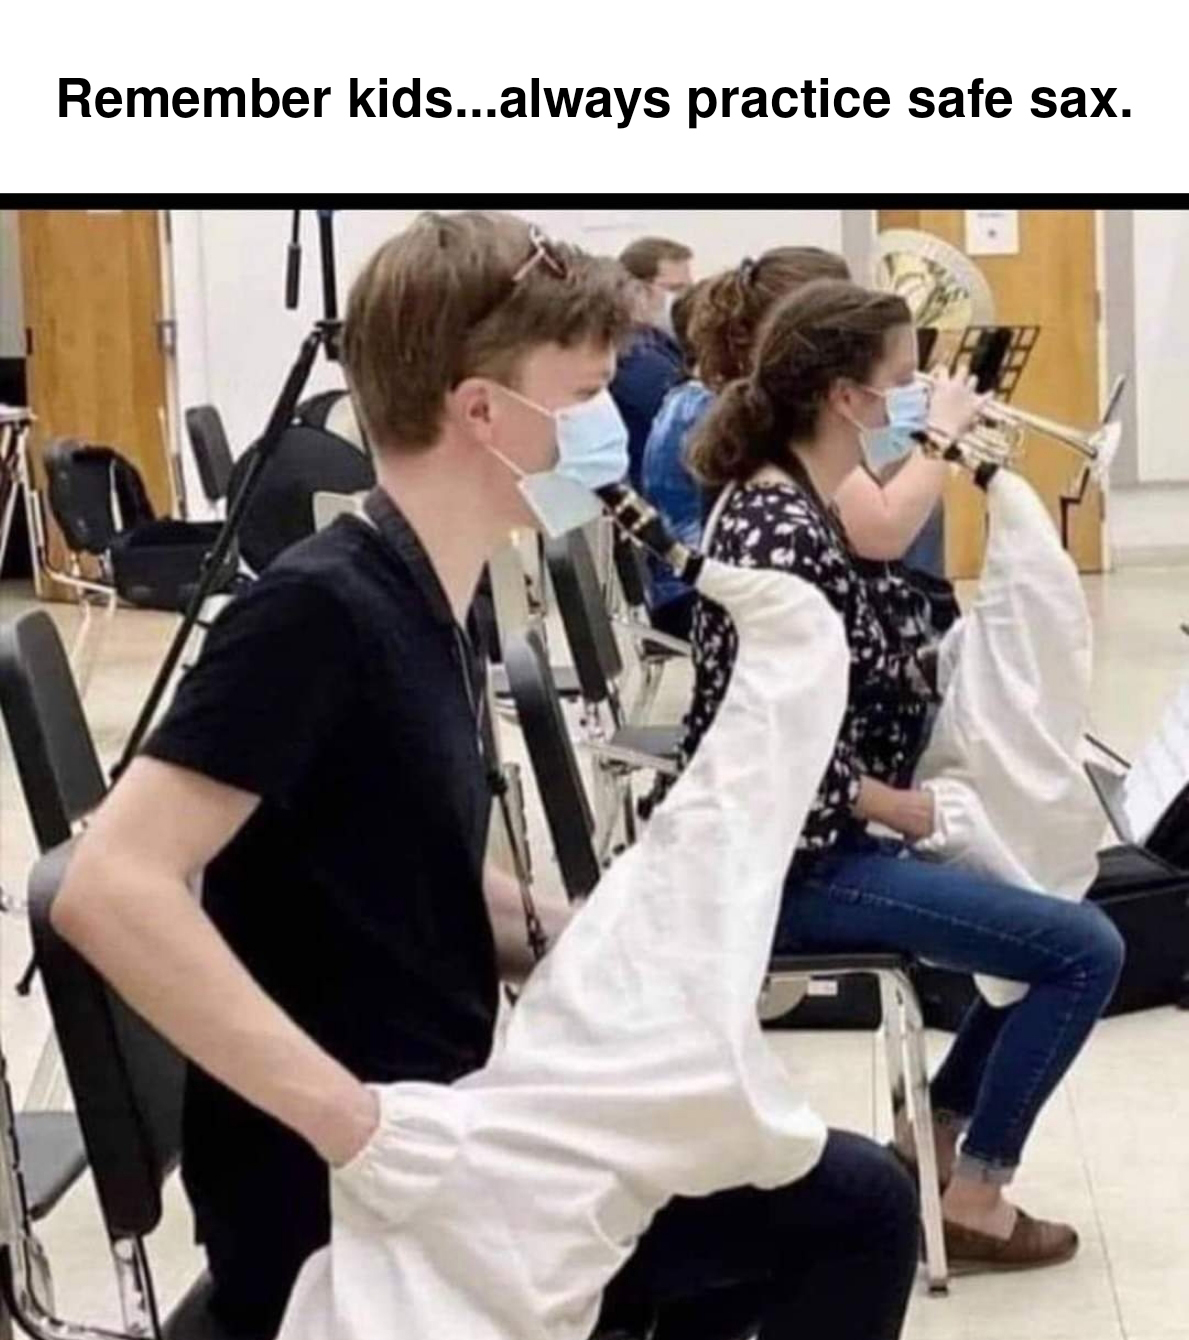 safe sax meme - Remember kids...always practice safe sax.